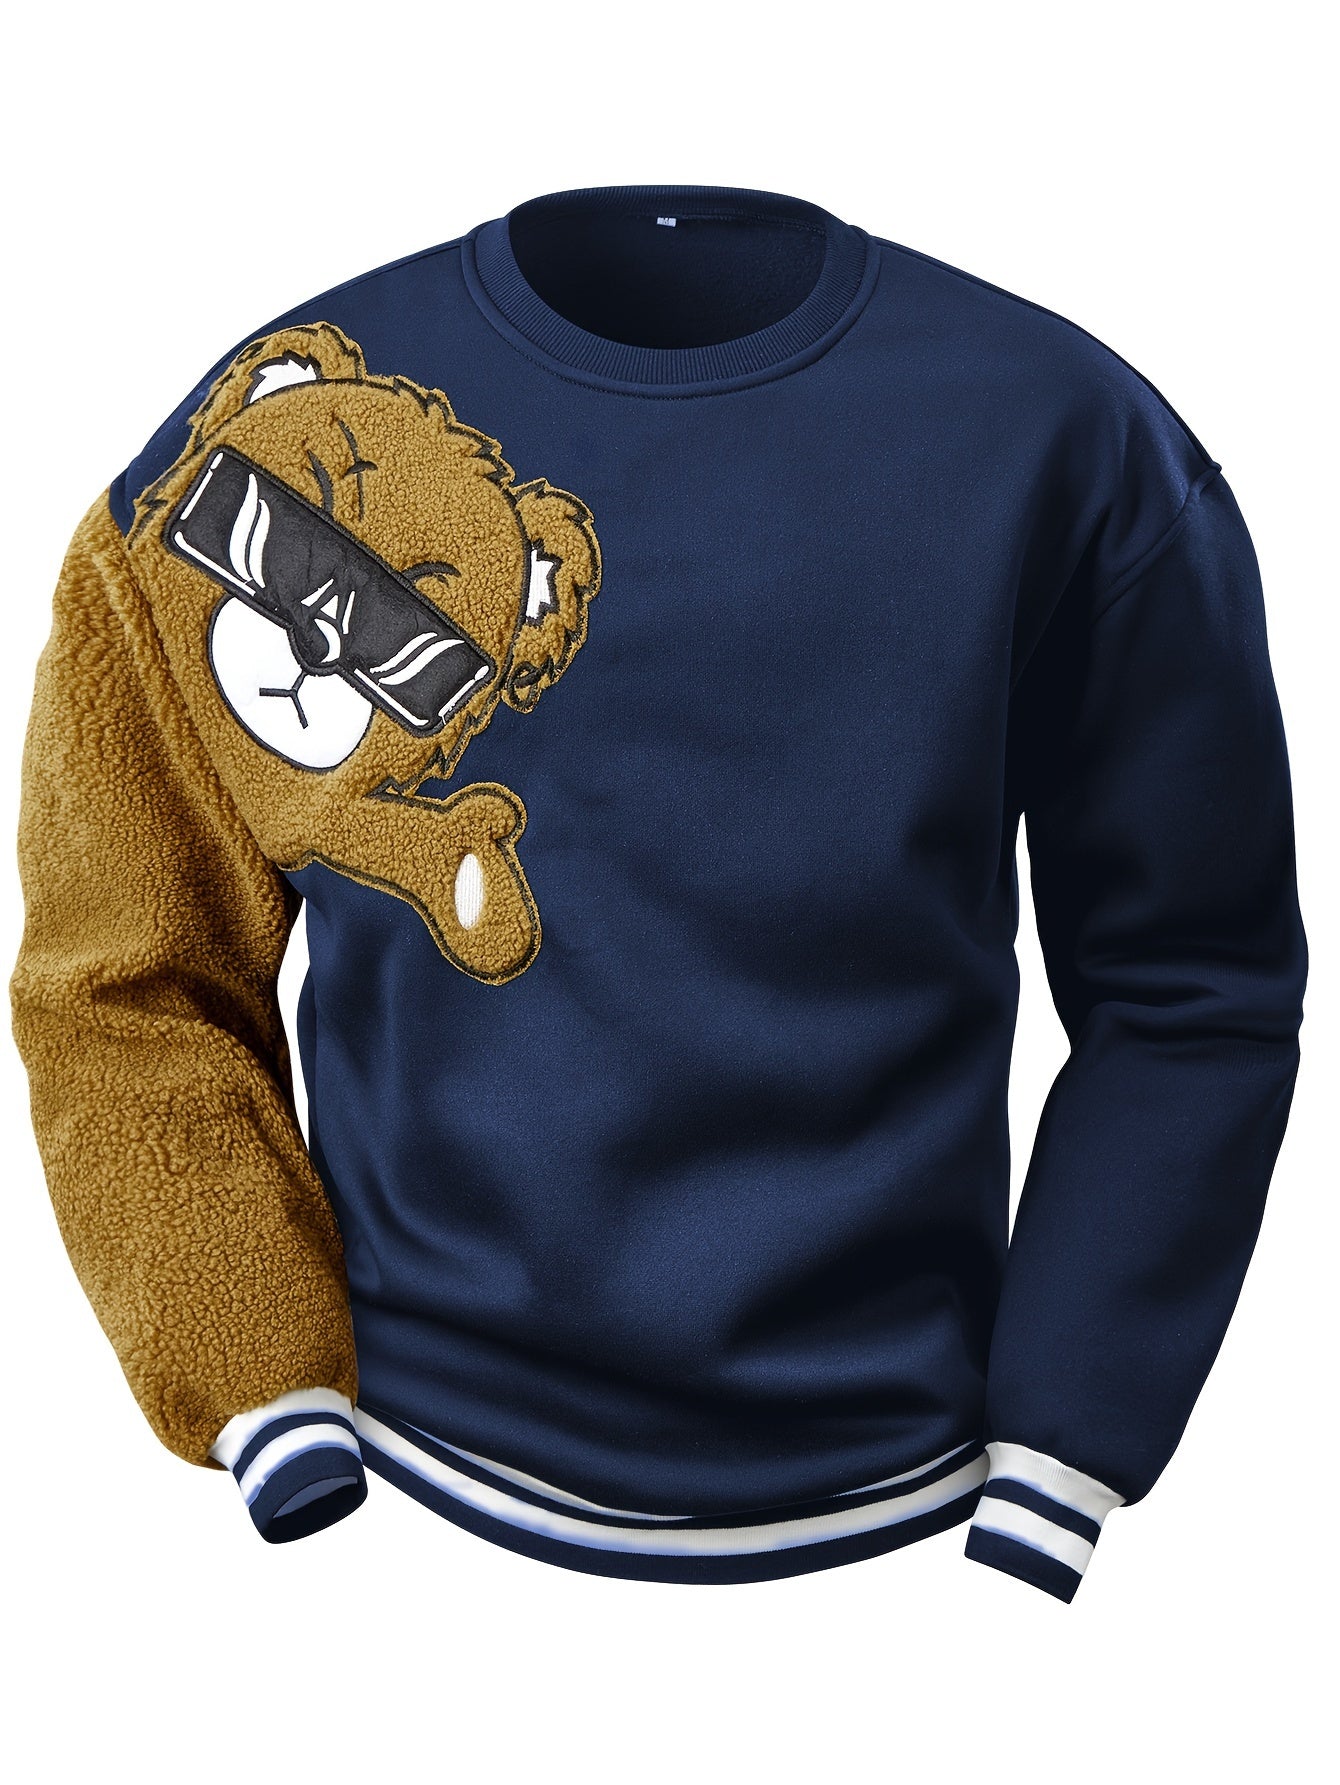 Casual Wear Cozy Men's Sweatshirt with Embroided Bear cartoon